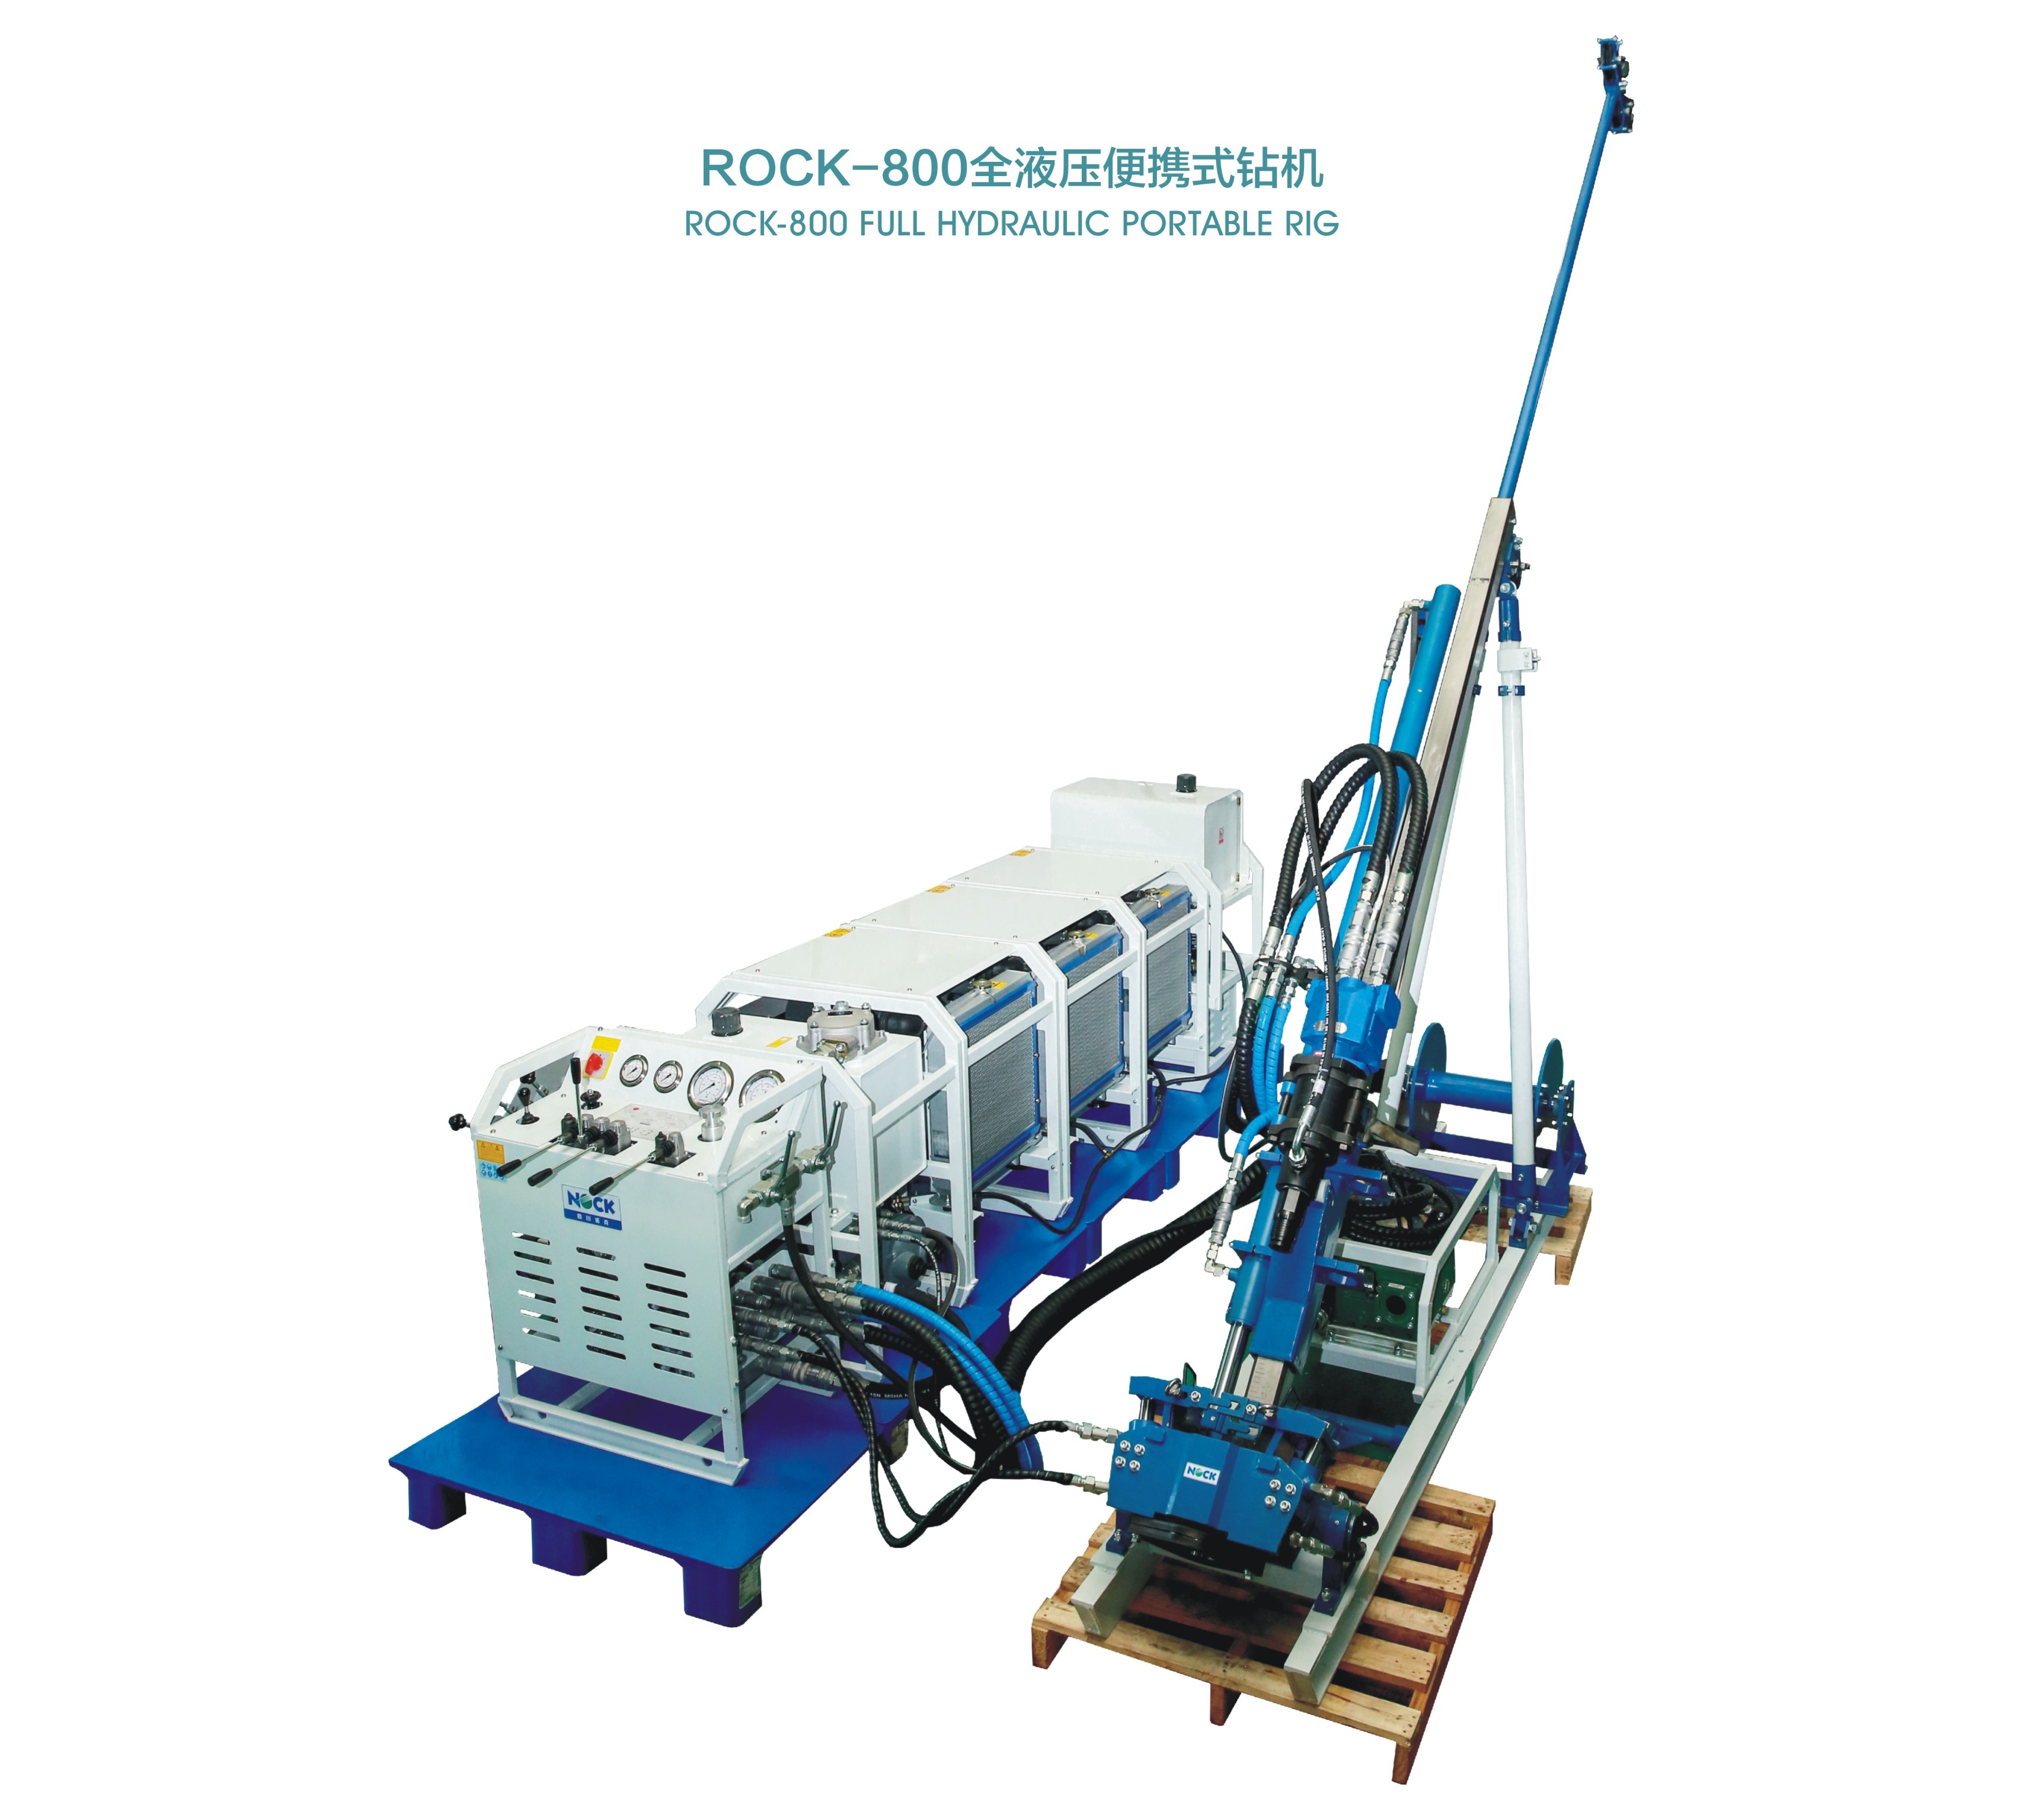 ROCK-800型全液压便携式钻机